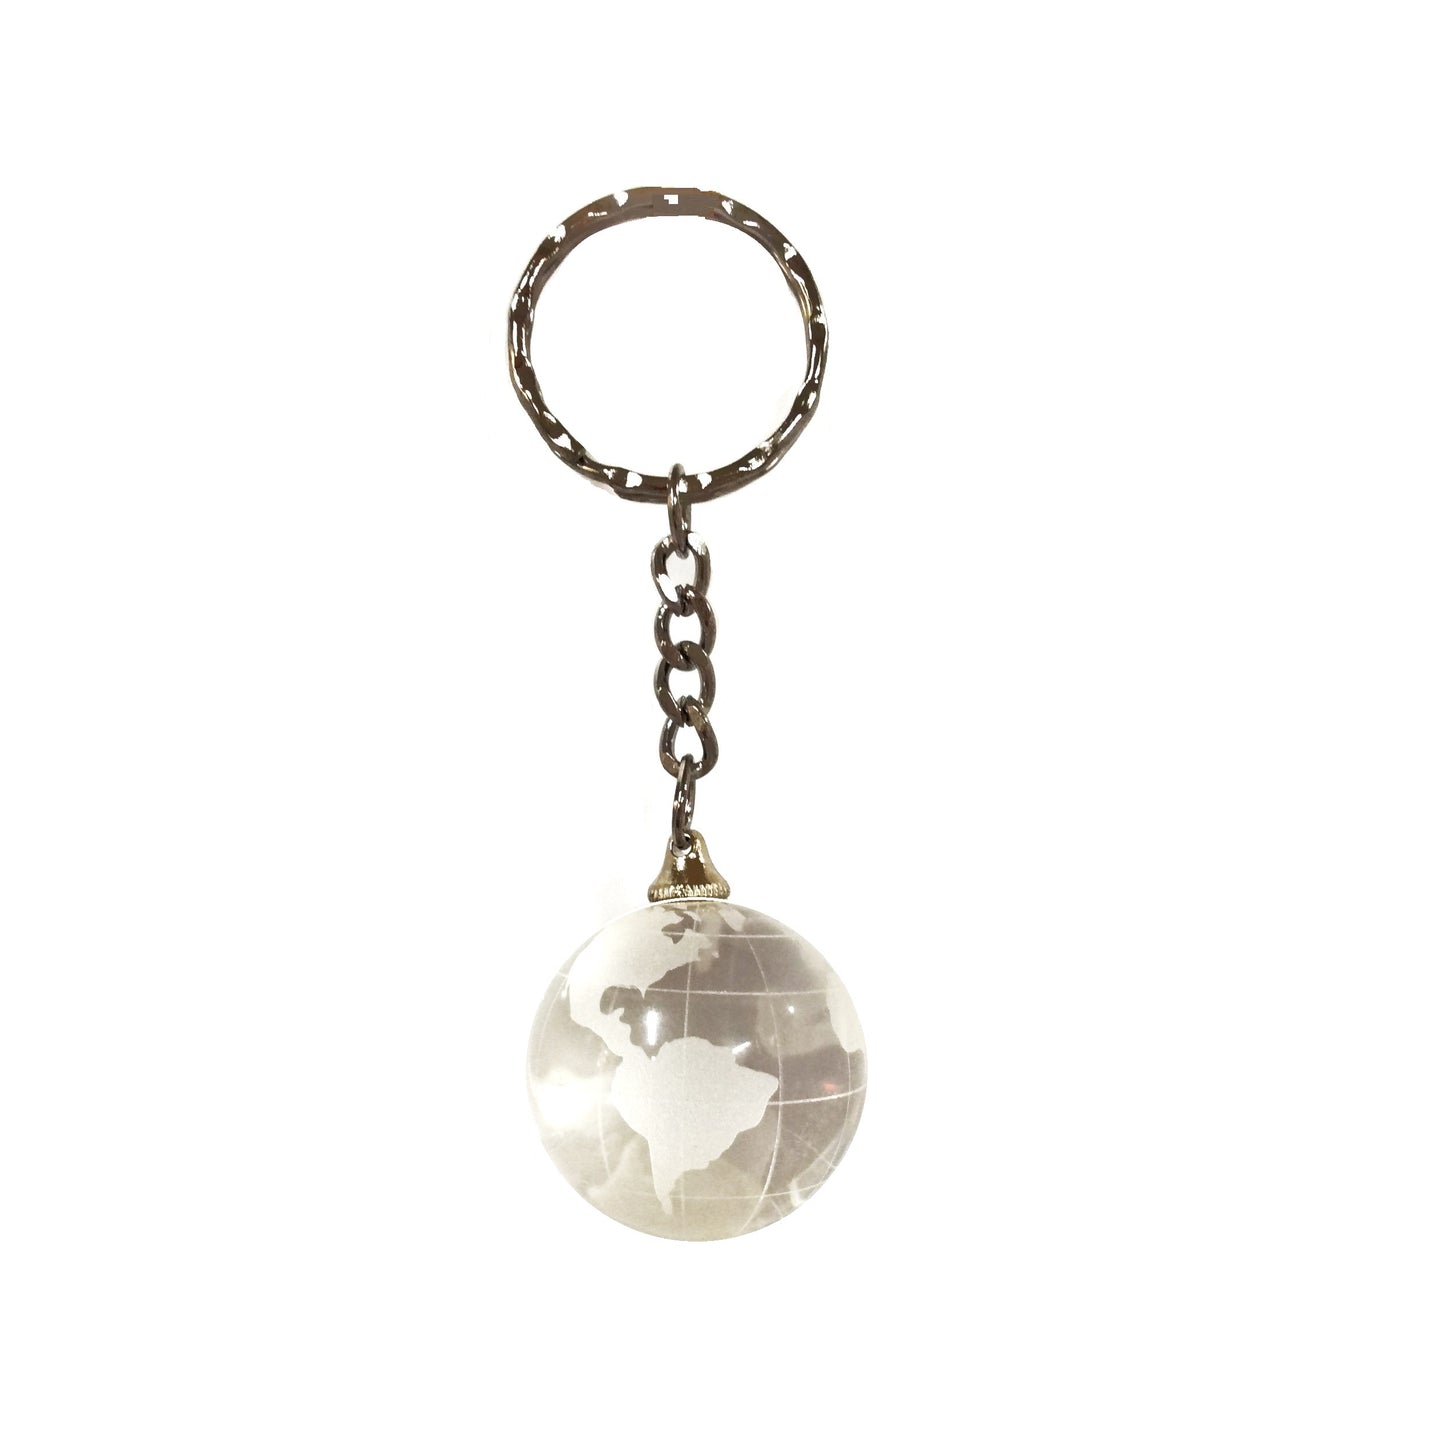 Glass Globe Key Chain #51-3320